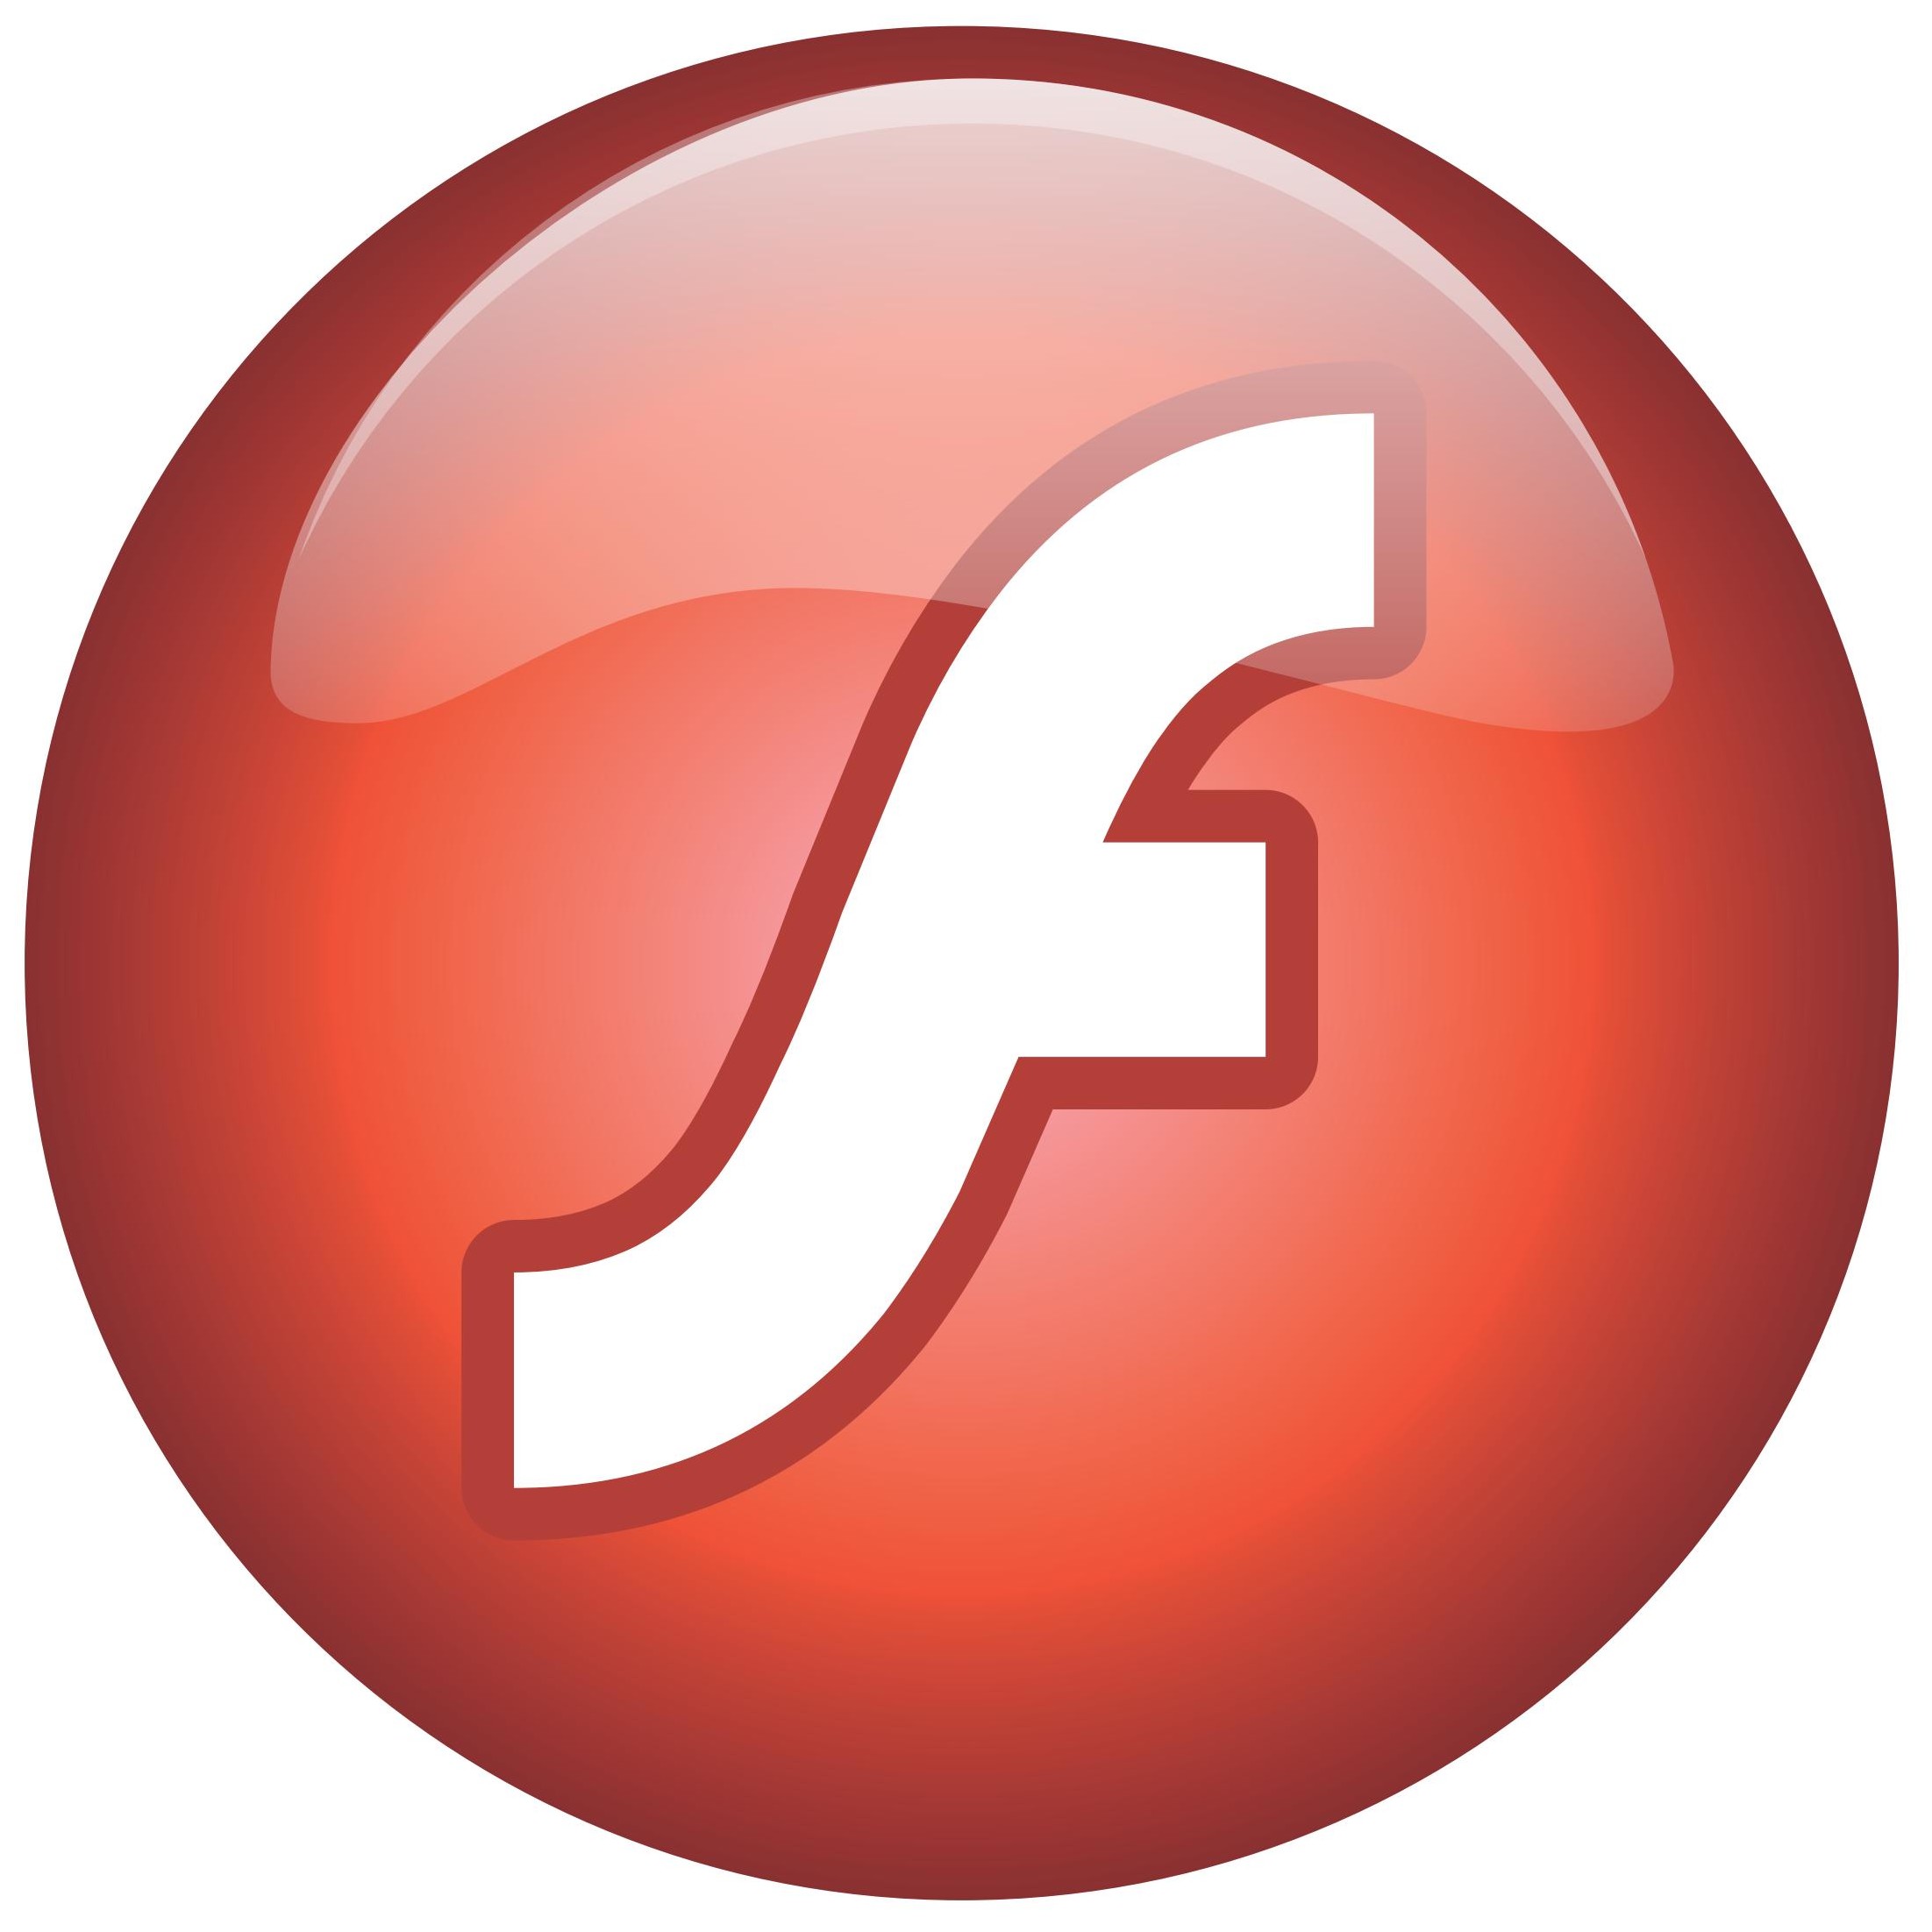 Adobe Flash Logo [EPS File]